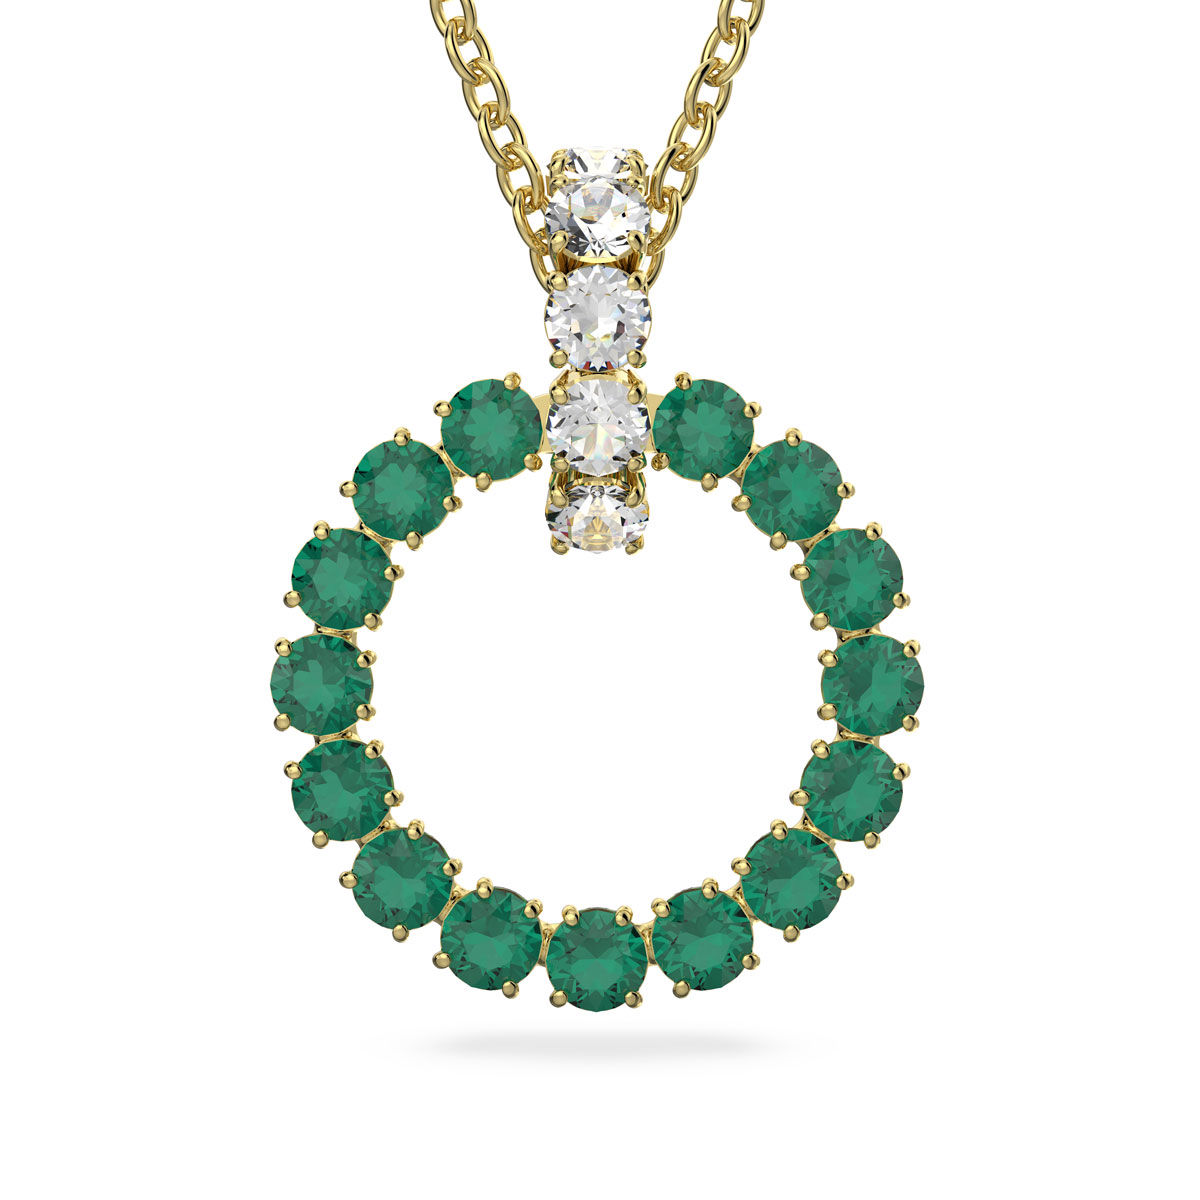 Swarovski Exalta Green, Gold-Tone Plated Pendant Necklace